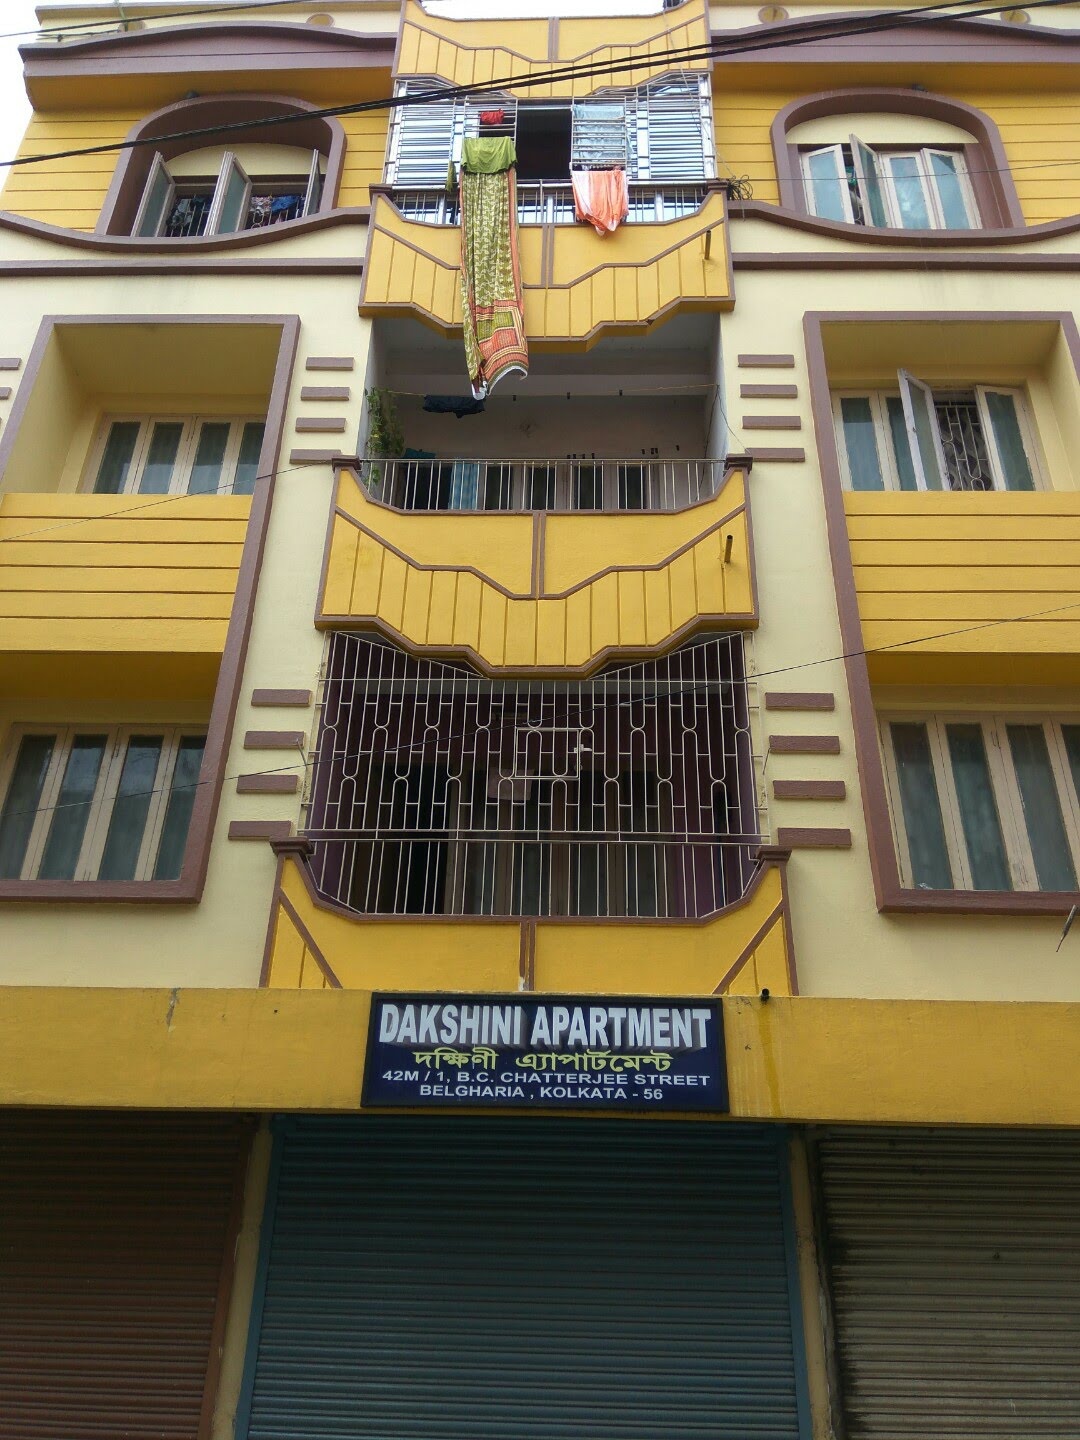 Dhakhini apartment